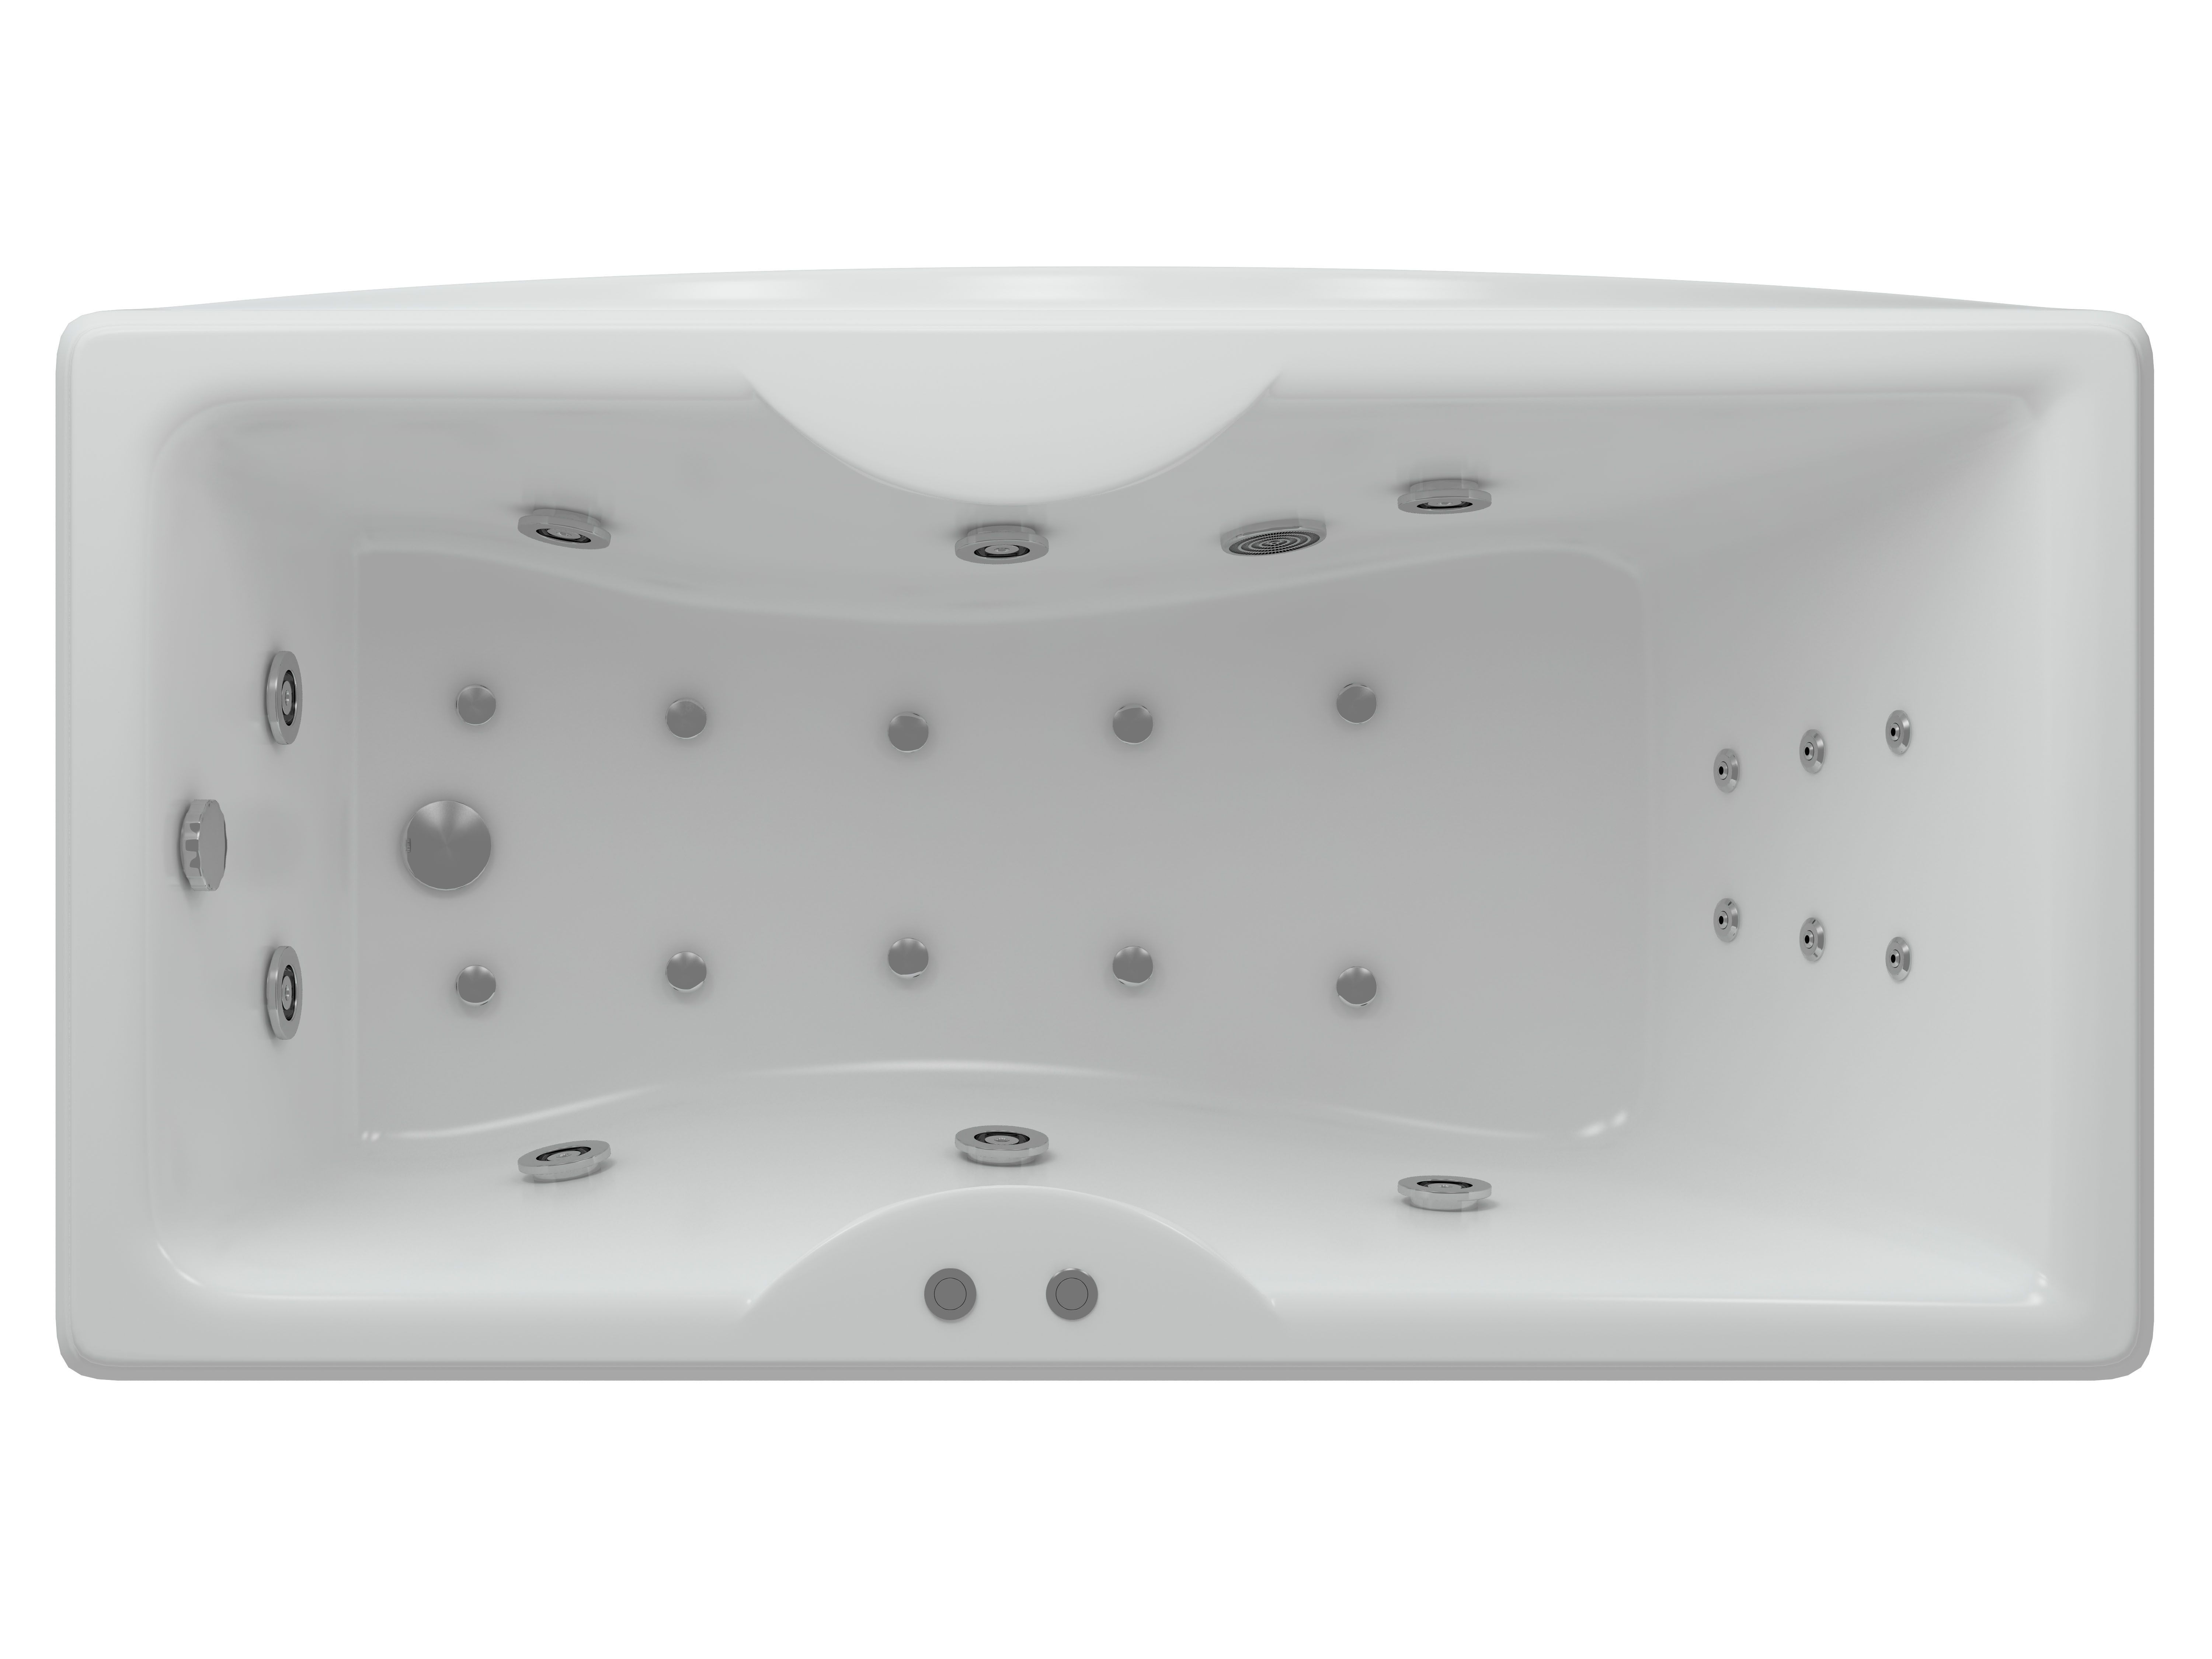 Акриловая ванна Aquatek Феникс 190 см на сборно-разборном каркасе